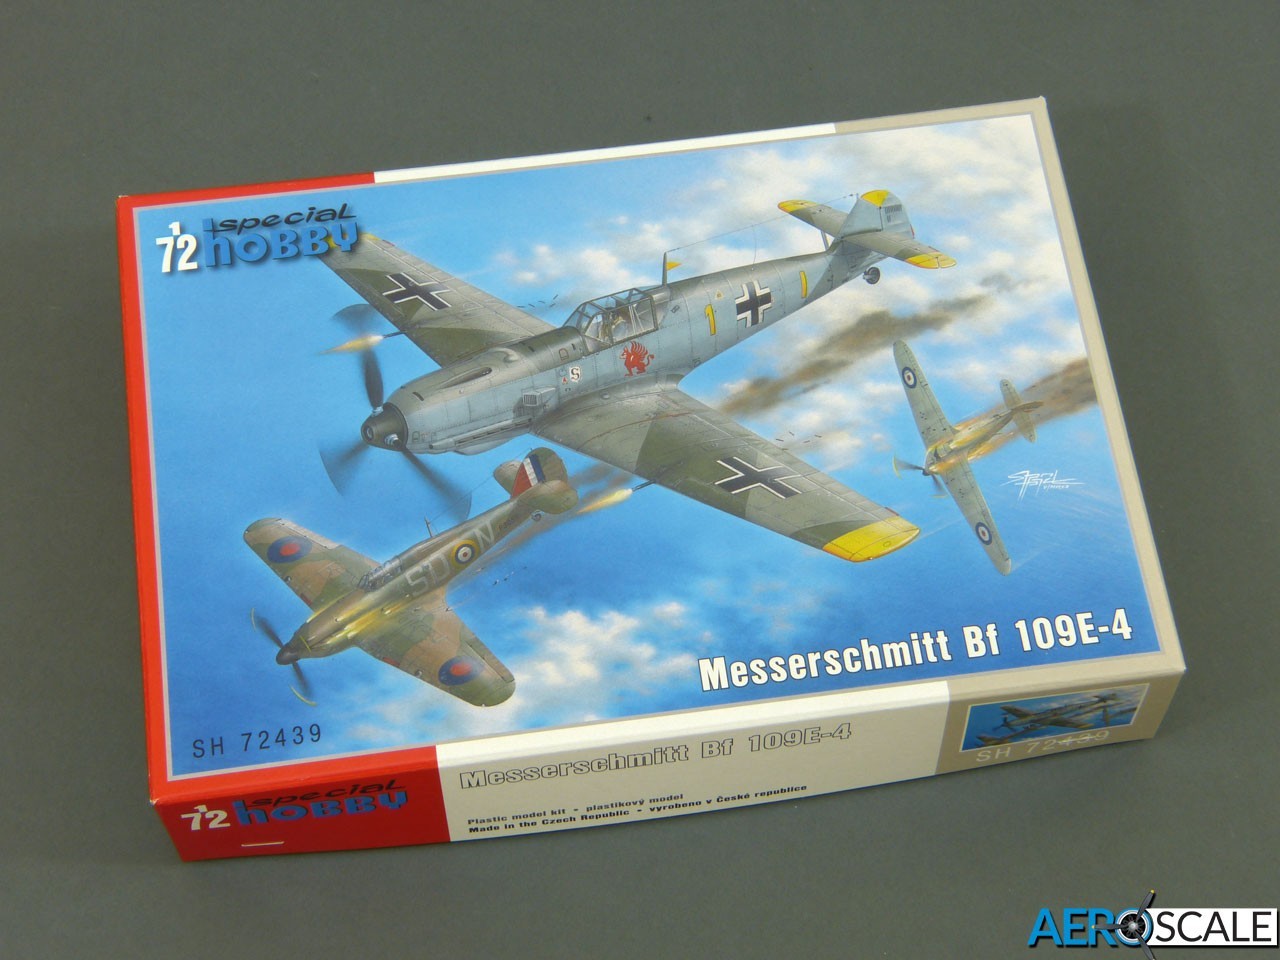 Kit #SH72439 - Messerschmitt Bf 109E-4. Price: 16.20 Euros